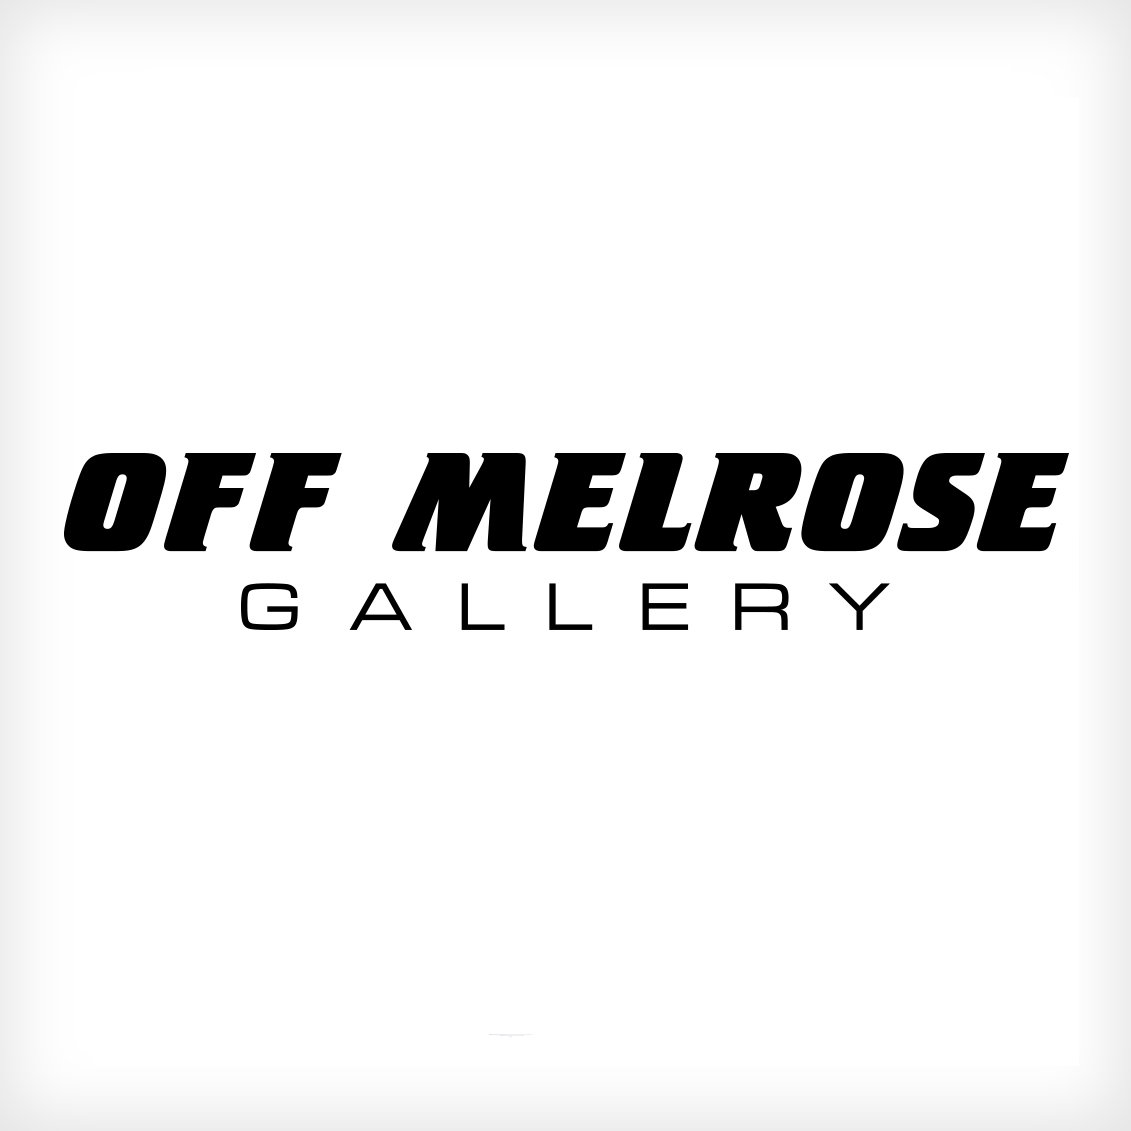 "Off Melrose Gallery" Logo